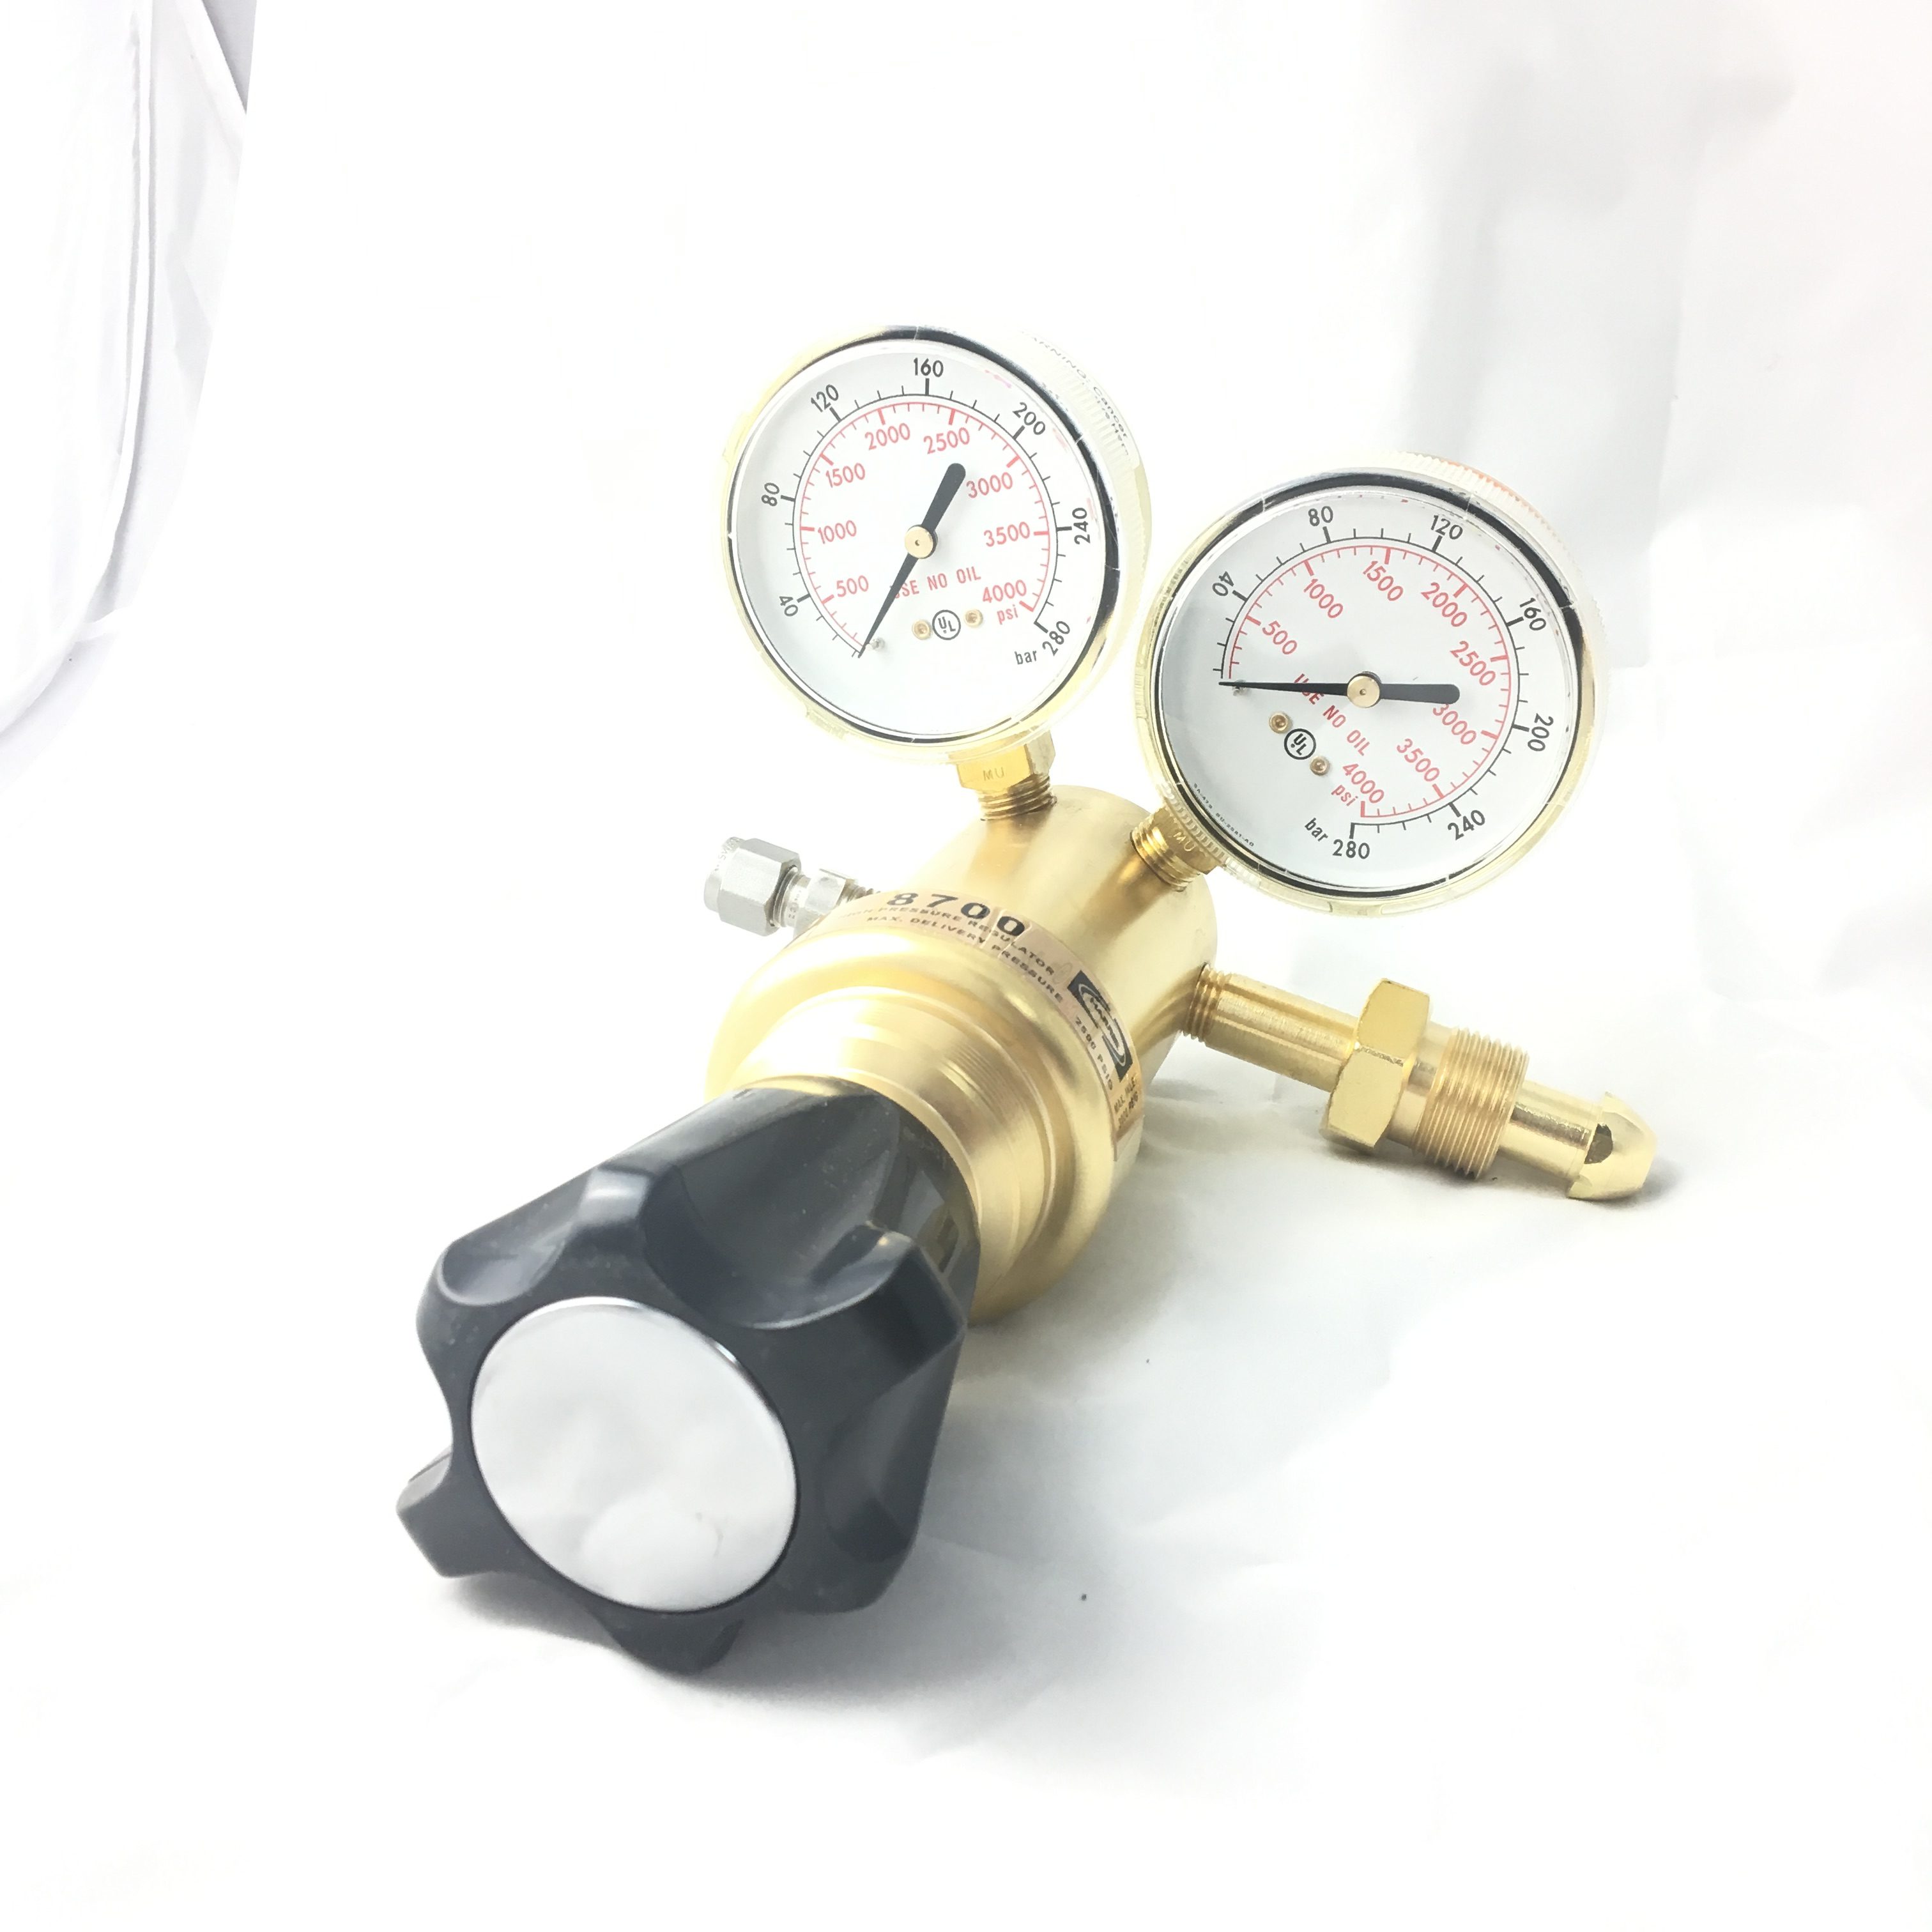 for Industrial Use Industrial Nitrogen Pressure Gauge Nitrogen Pressure Regulator Gauge Nitrogen Pressure Gauge Pressure Gauges Nitrogen Regulator 